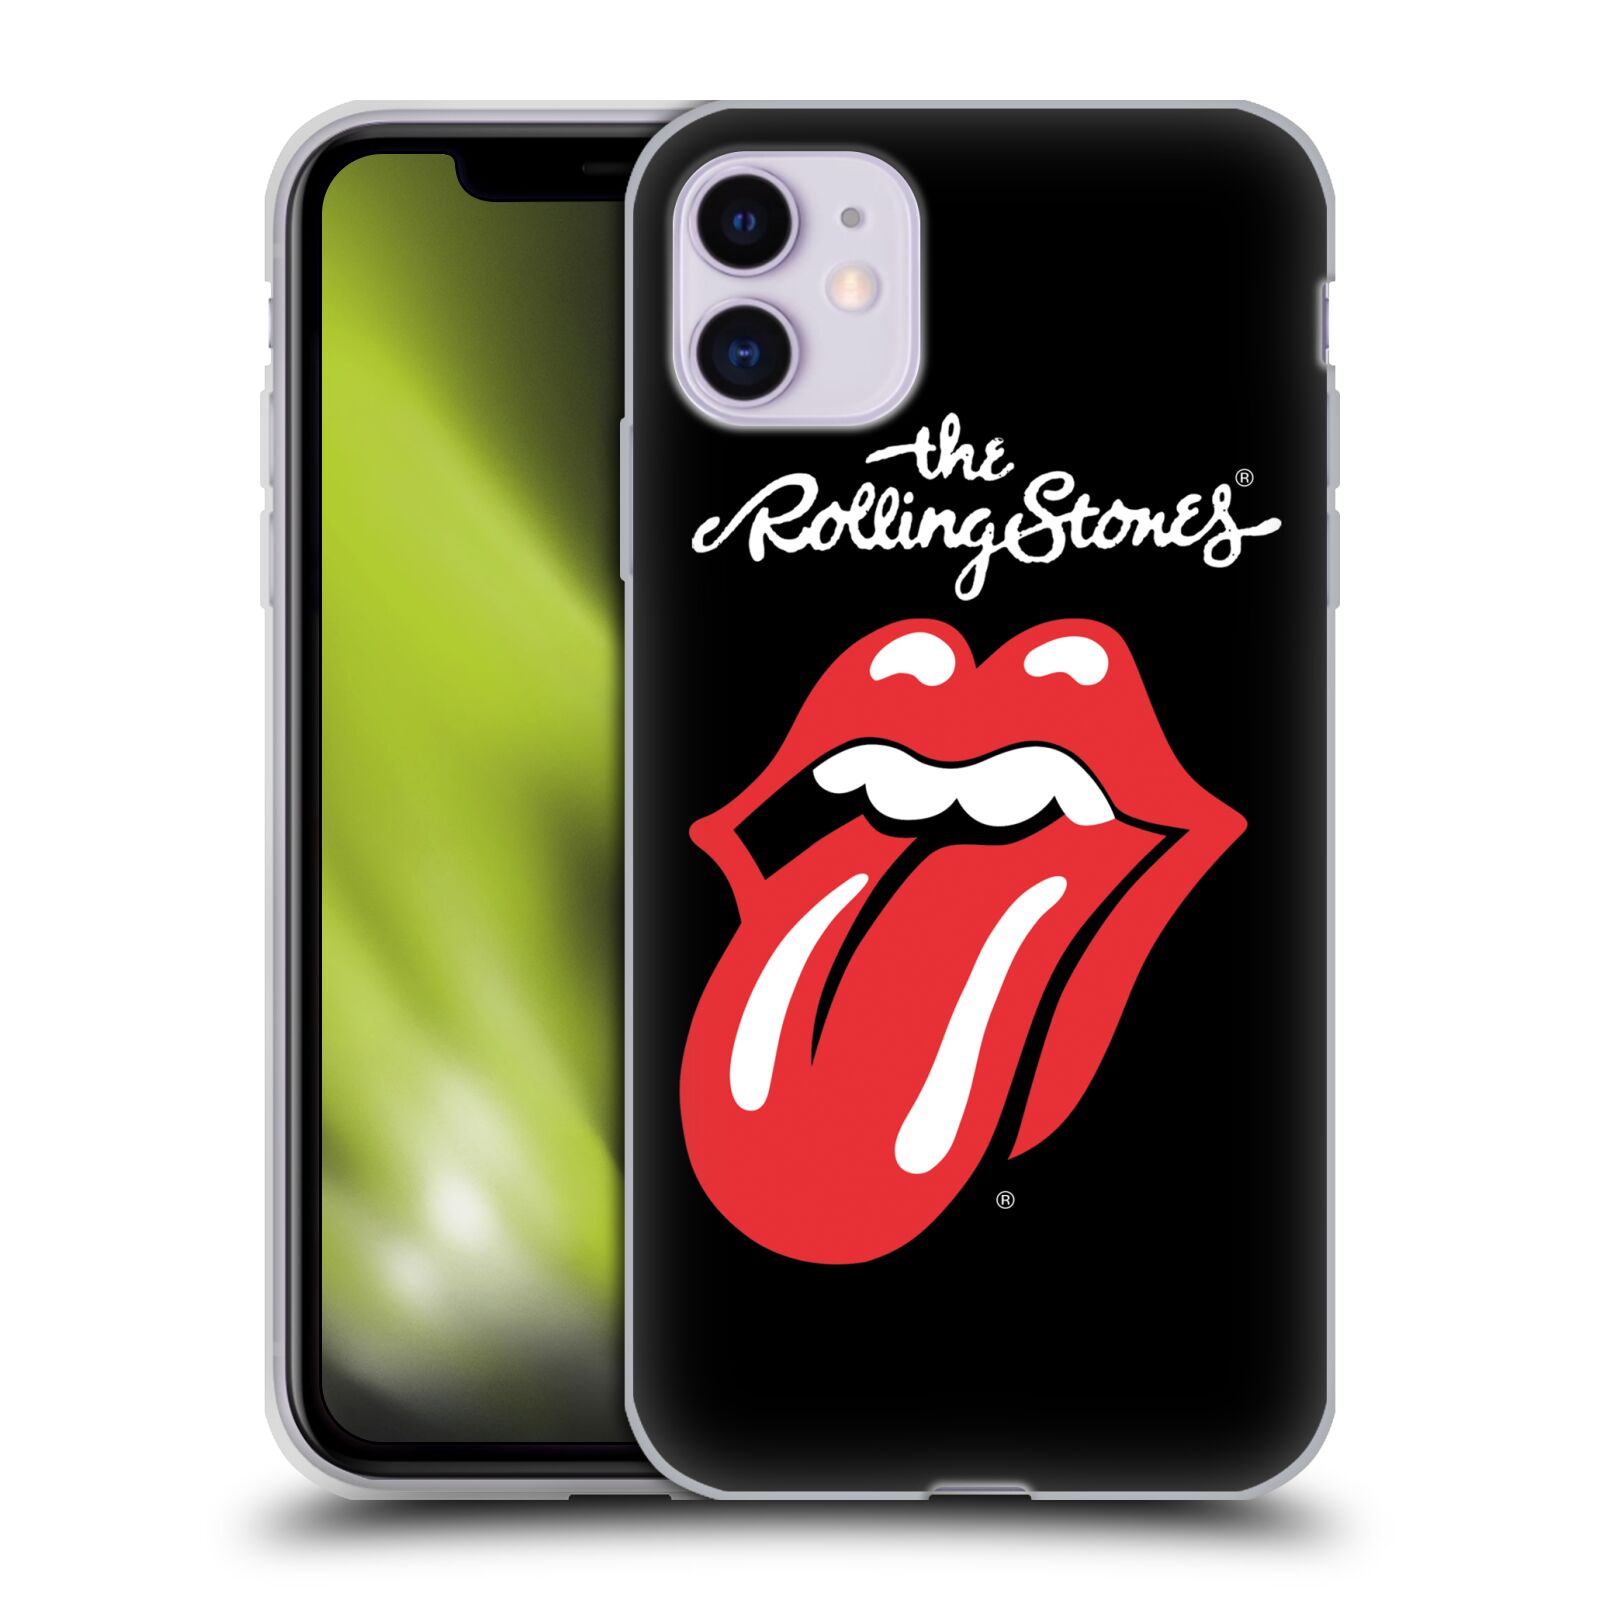 Silikonové pouzdro na mobil Apple iPhone 11 - Head Case - The Rolling Stones - Classic Lick (Silikonový kryt, obal, pouzdro na mobilní telefon Apple iPhone 11 s displejem 6,1" s motivem The Rolling Stones - Classic Lick)